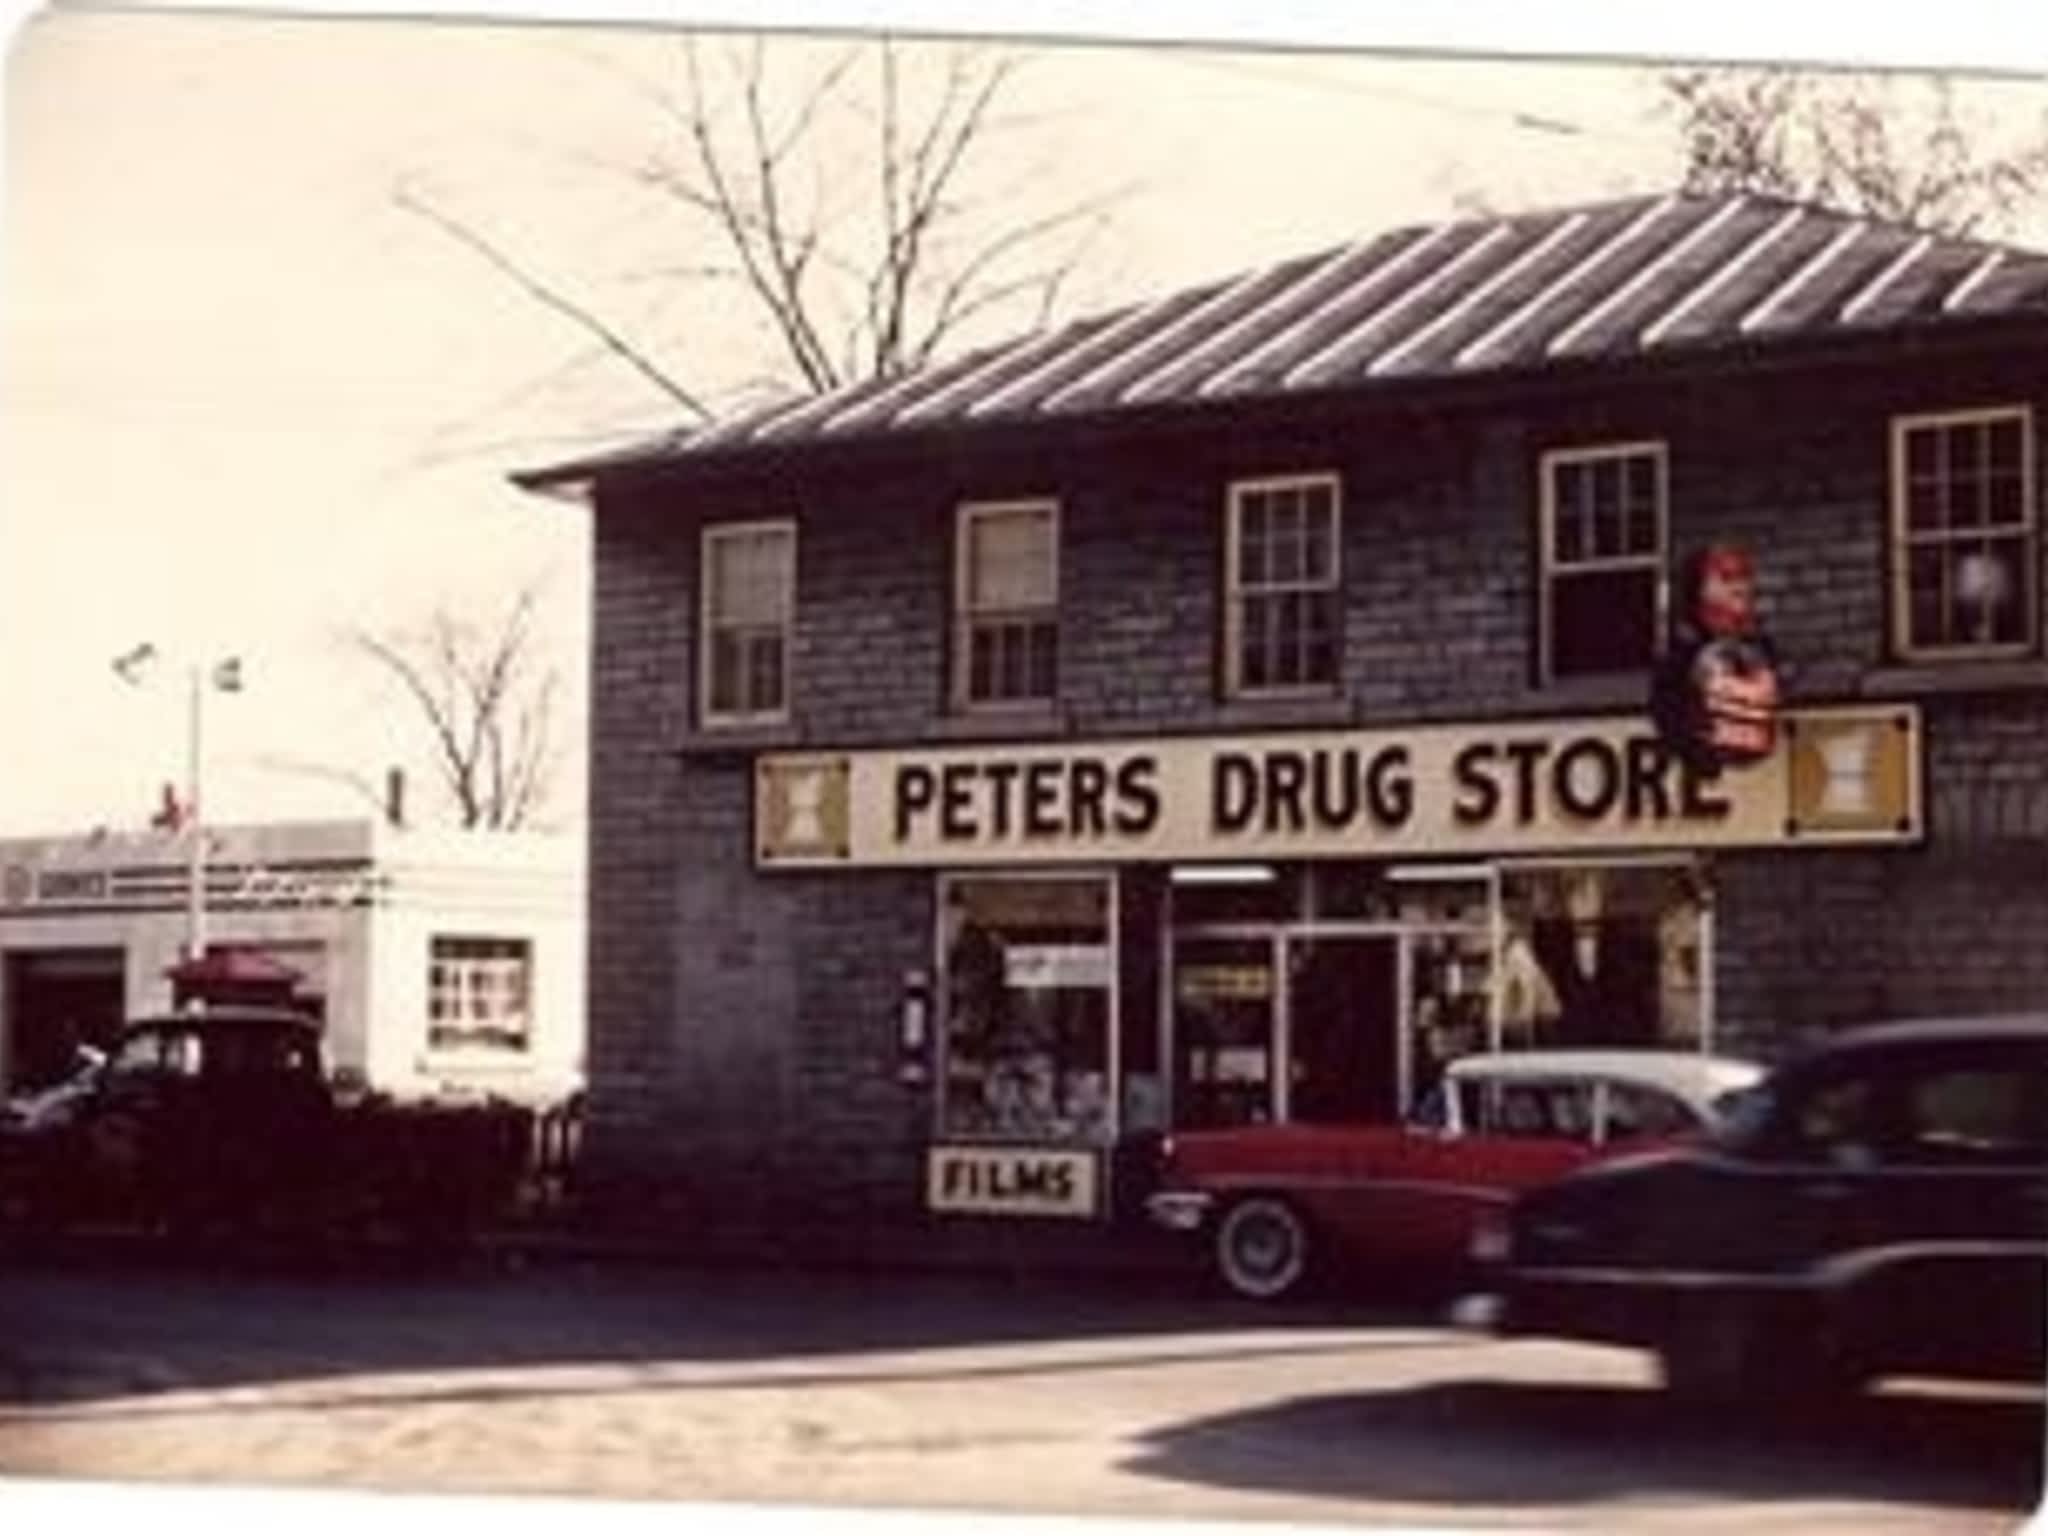 photo Peters Drugs Ltd